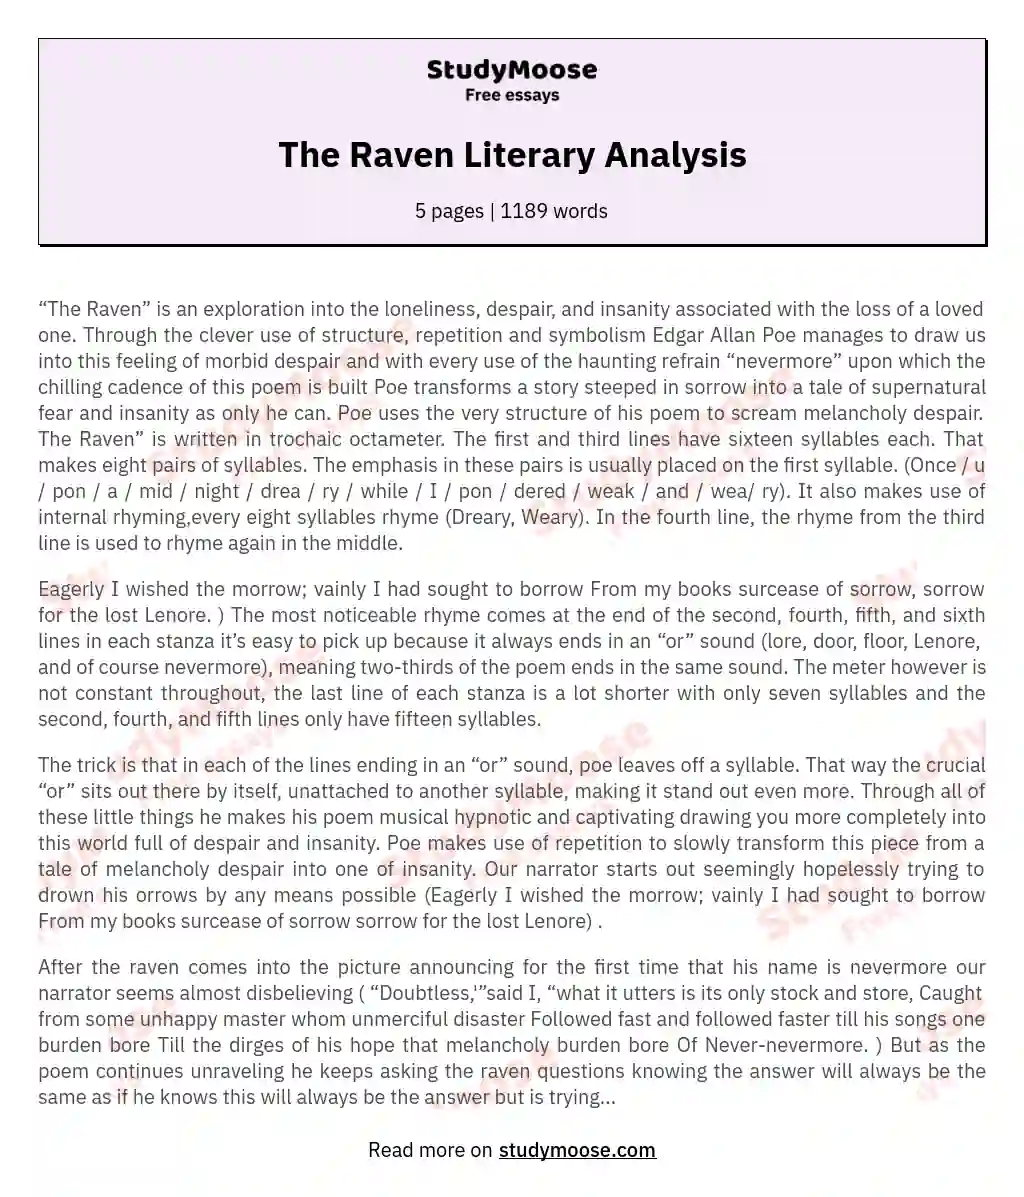 The Raven Literary Analysis essay